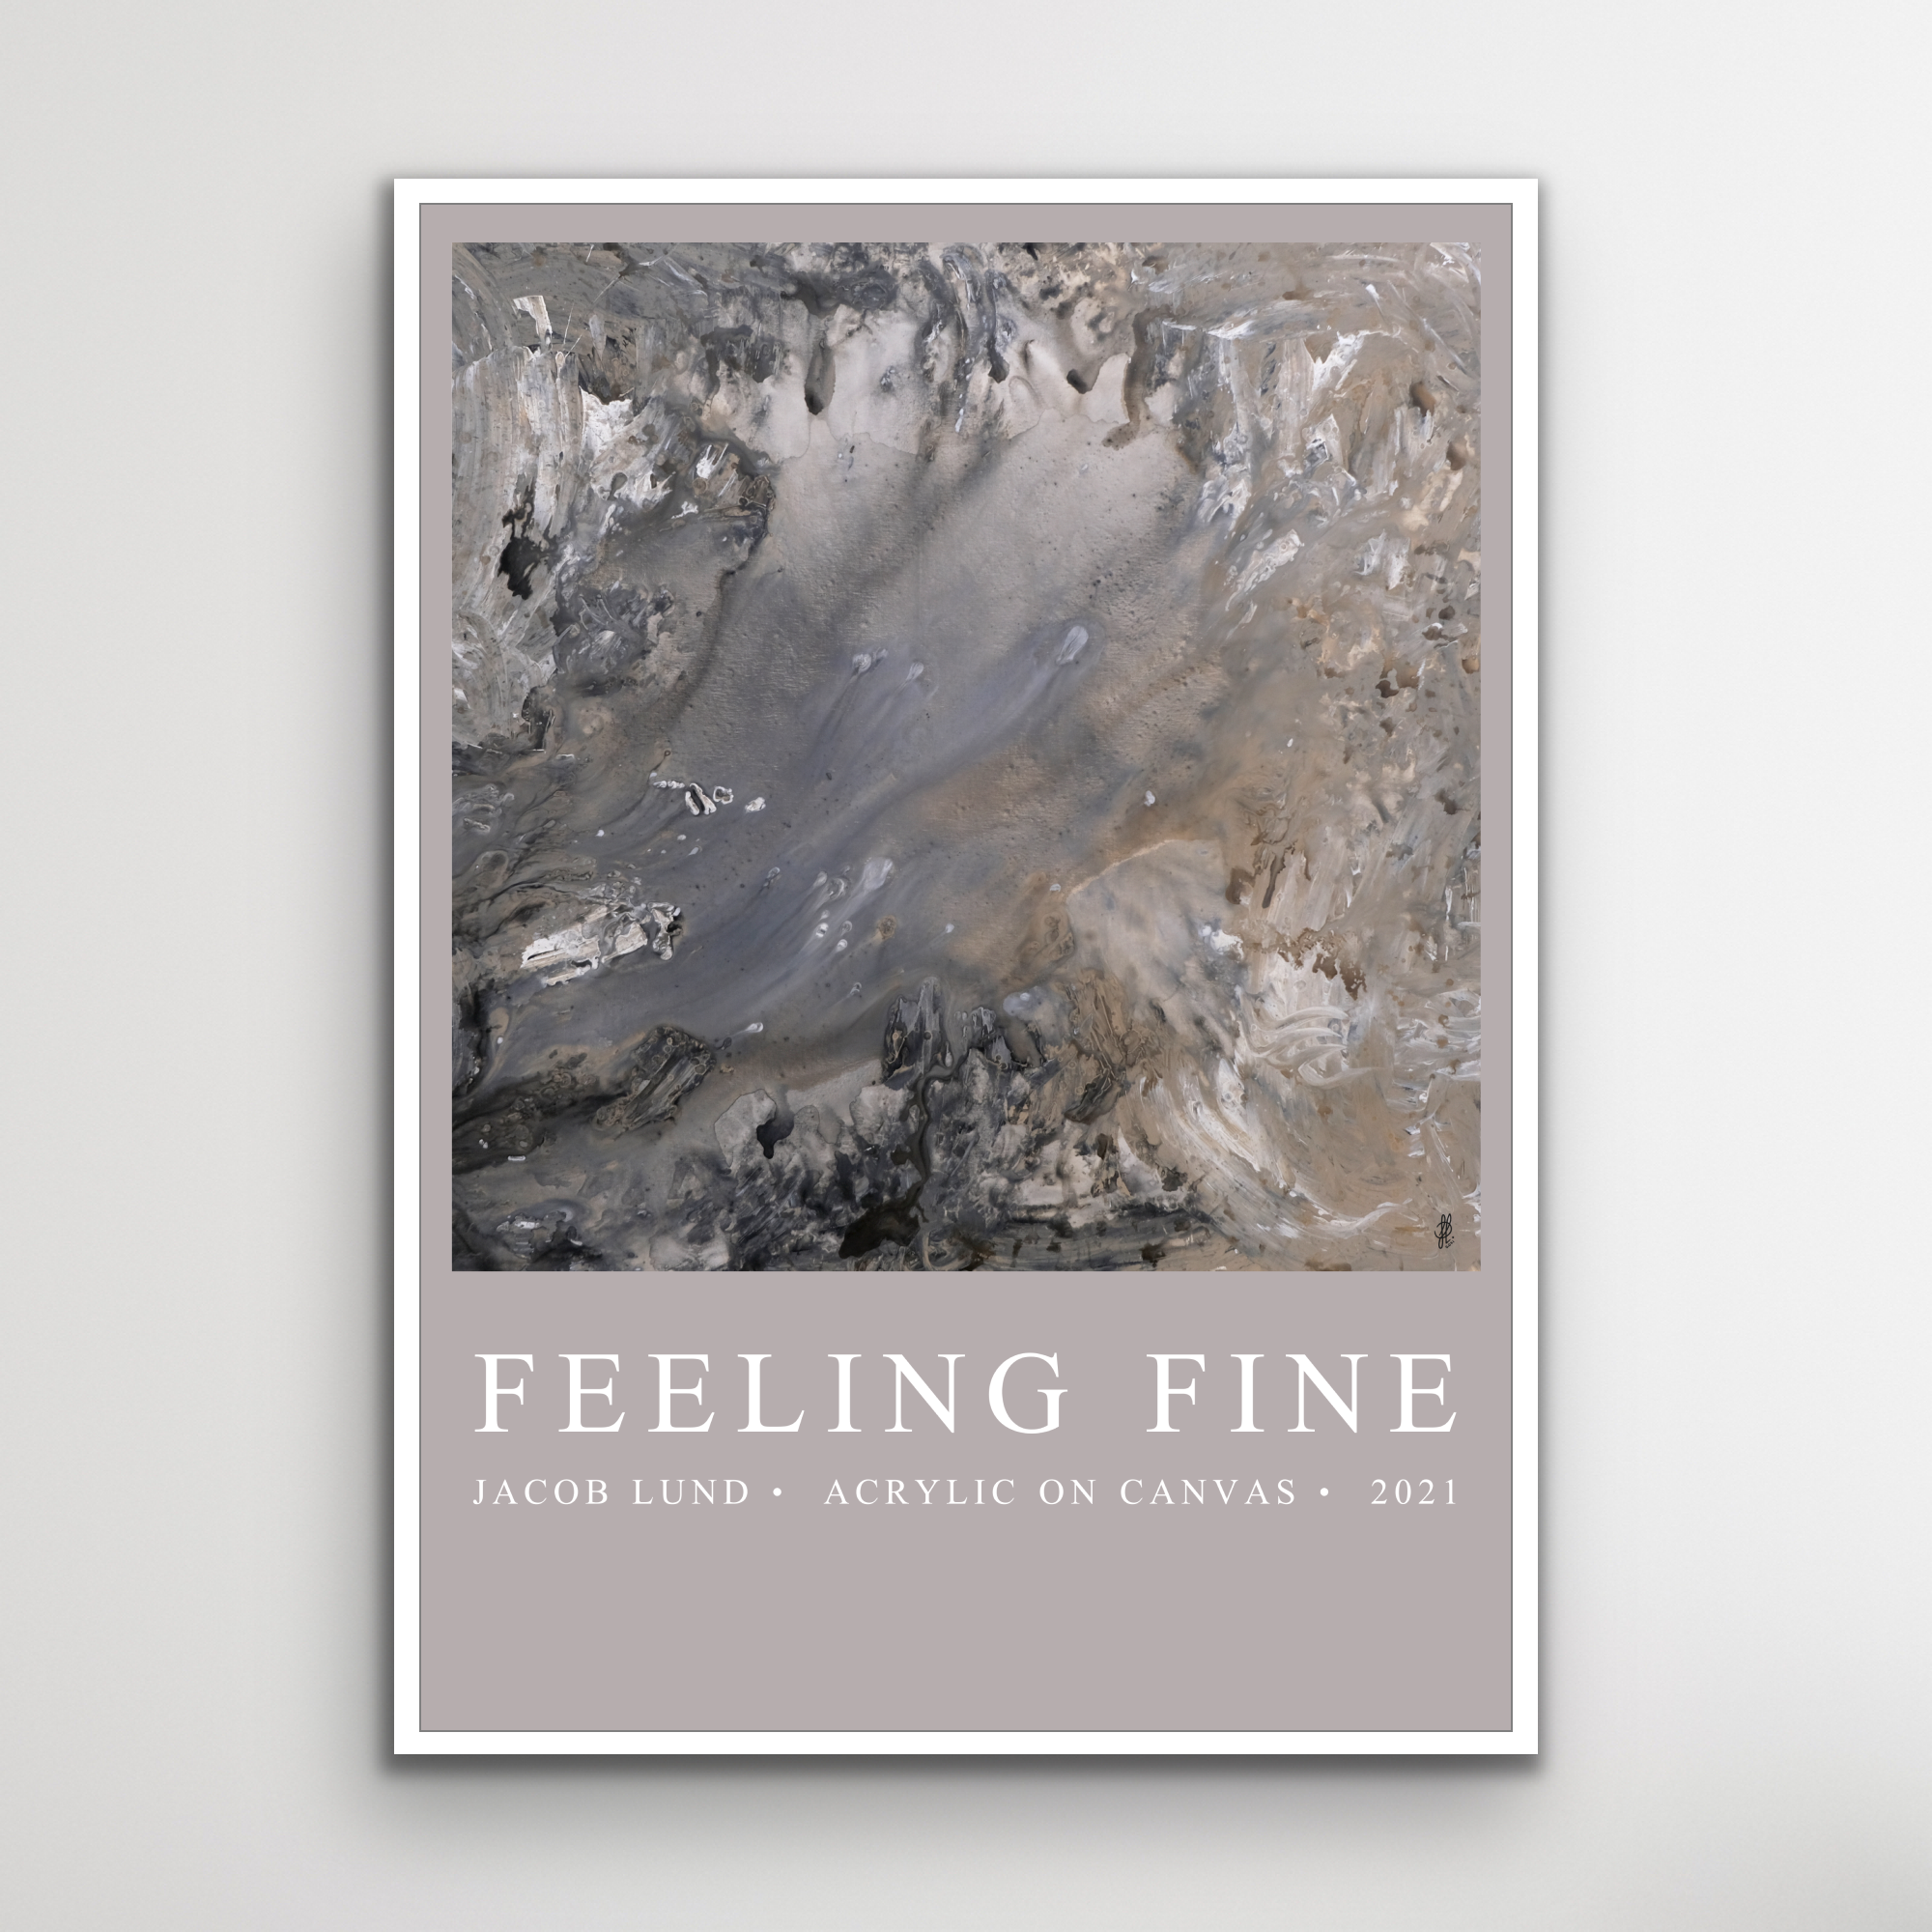 Plakat: "Feeling fine"